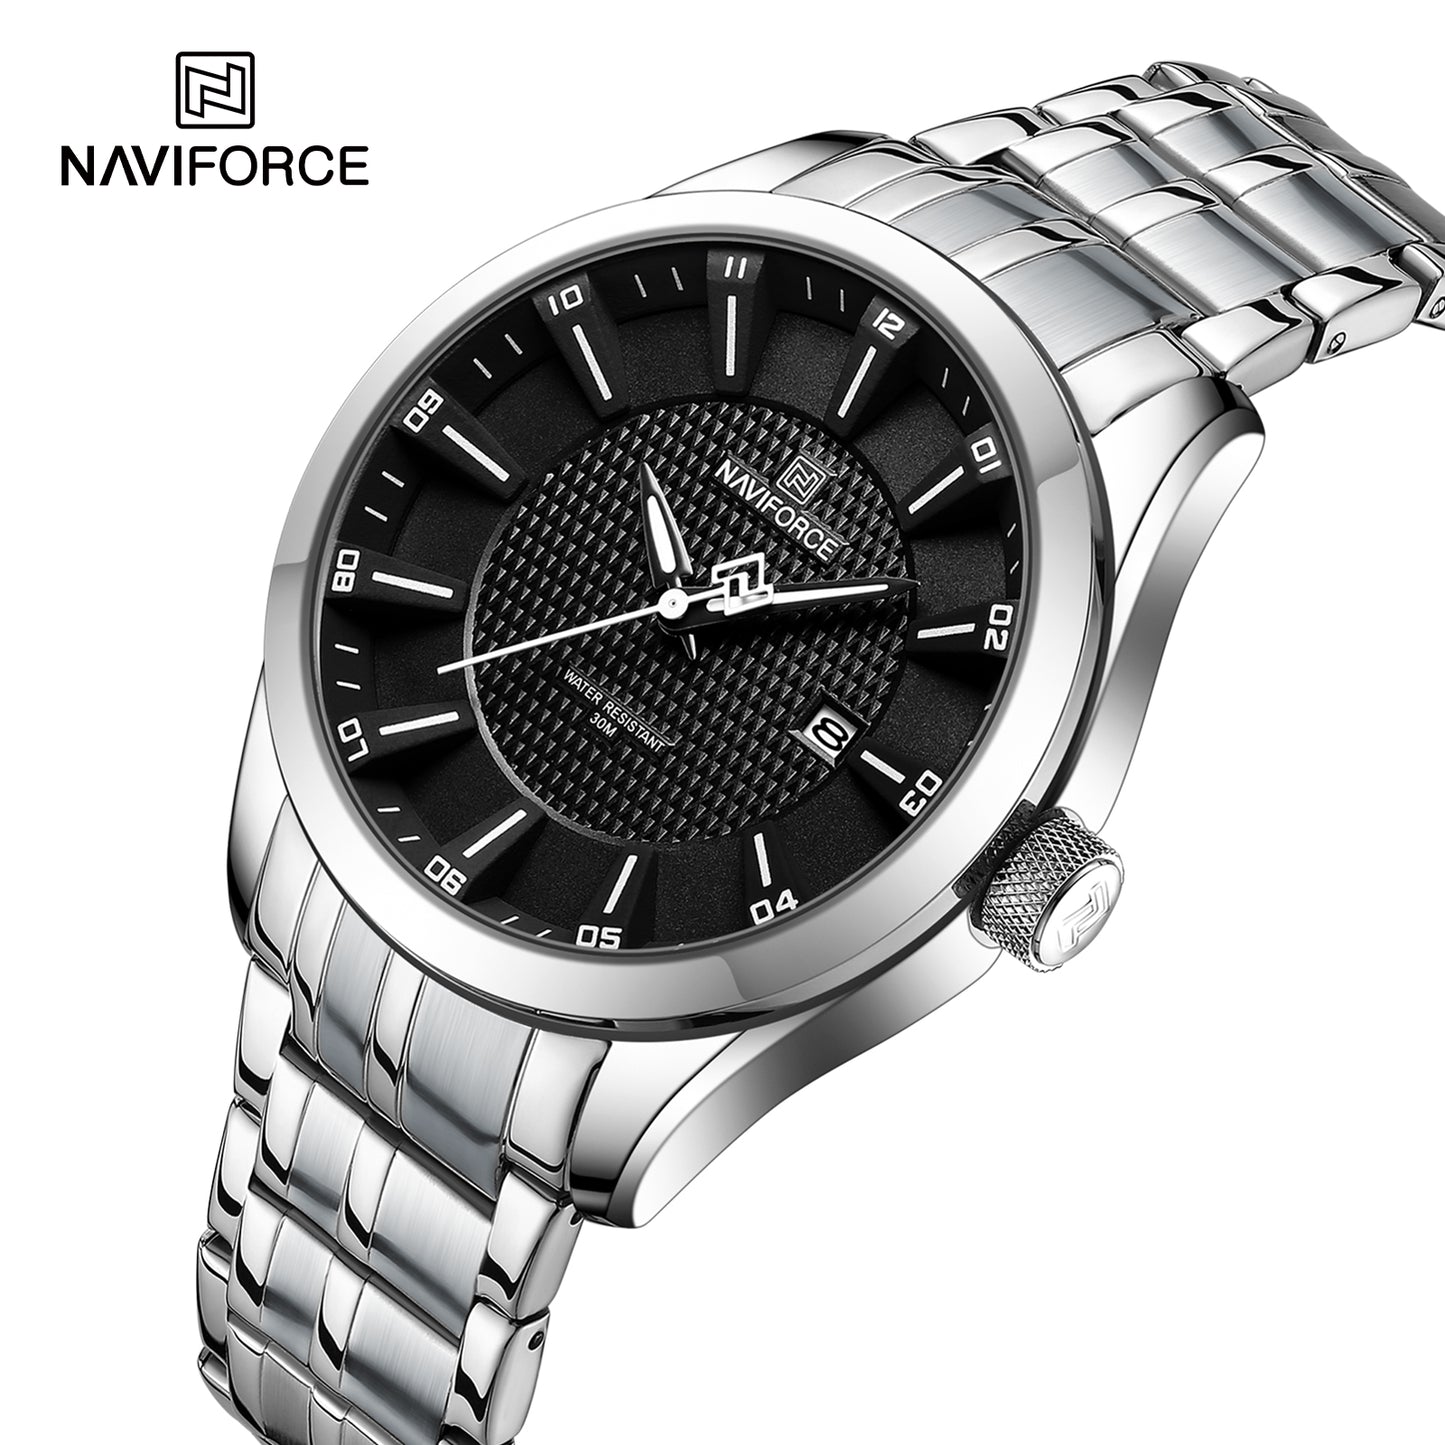 Naviforce 8032 Nebula Men Watch - Silver Black